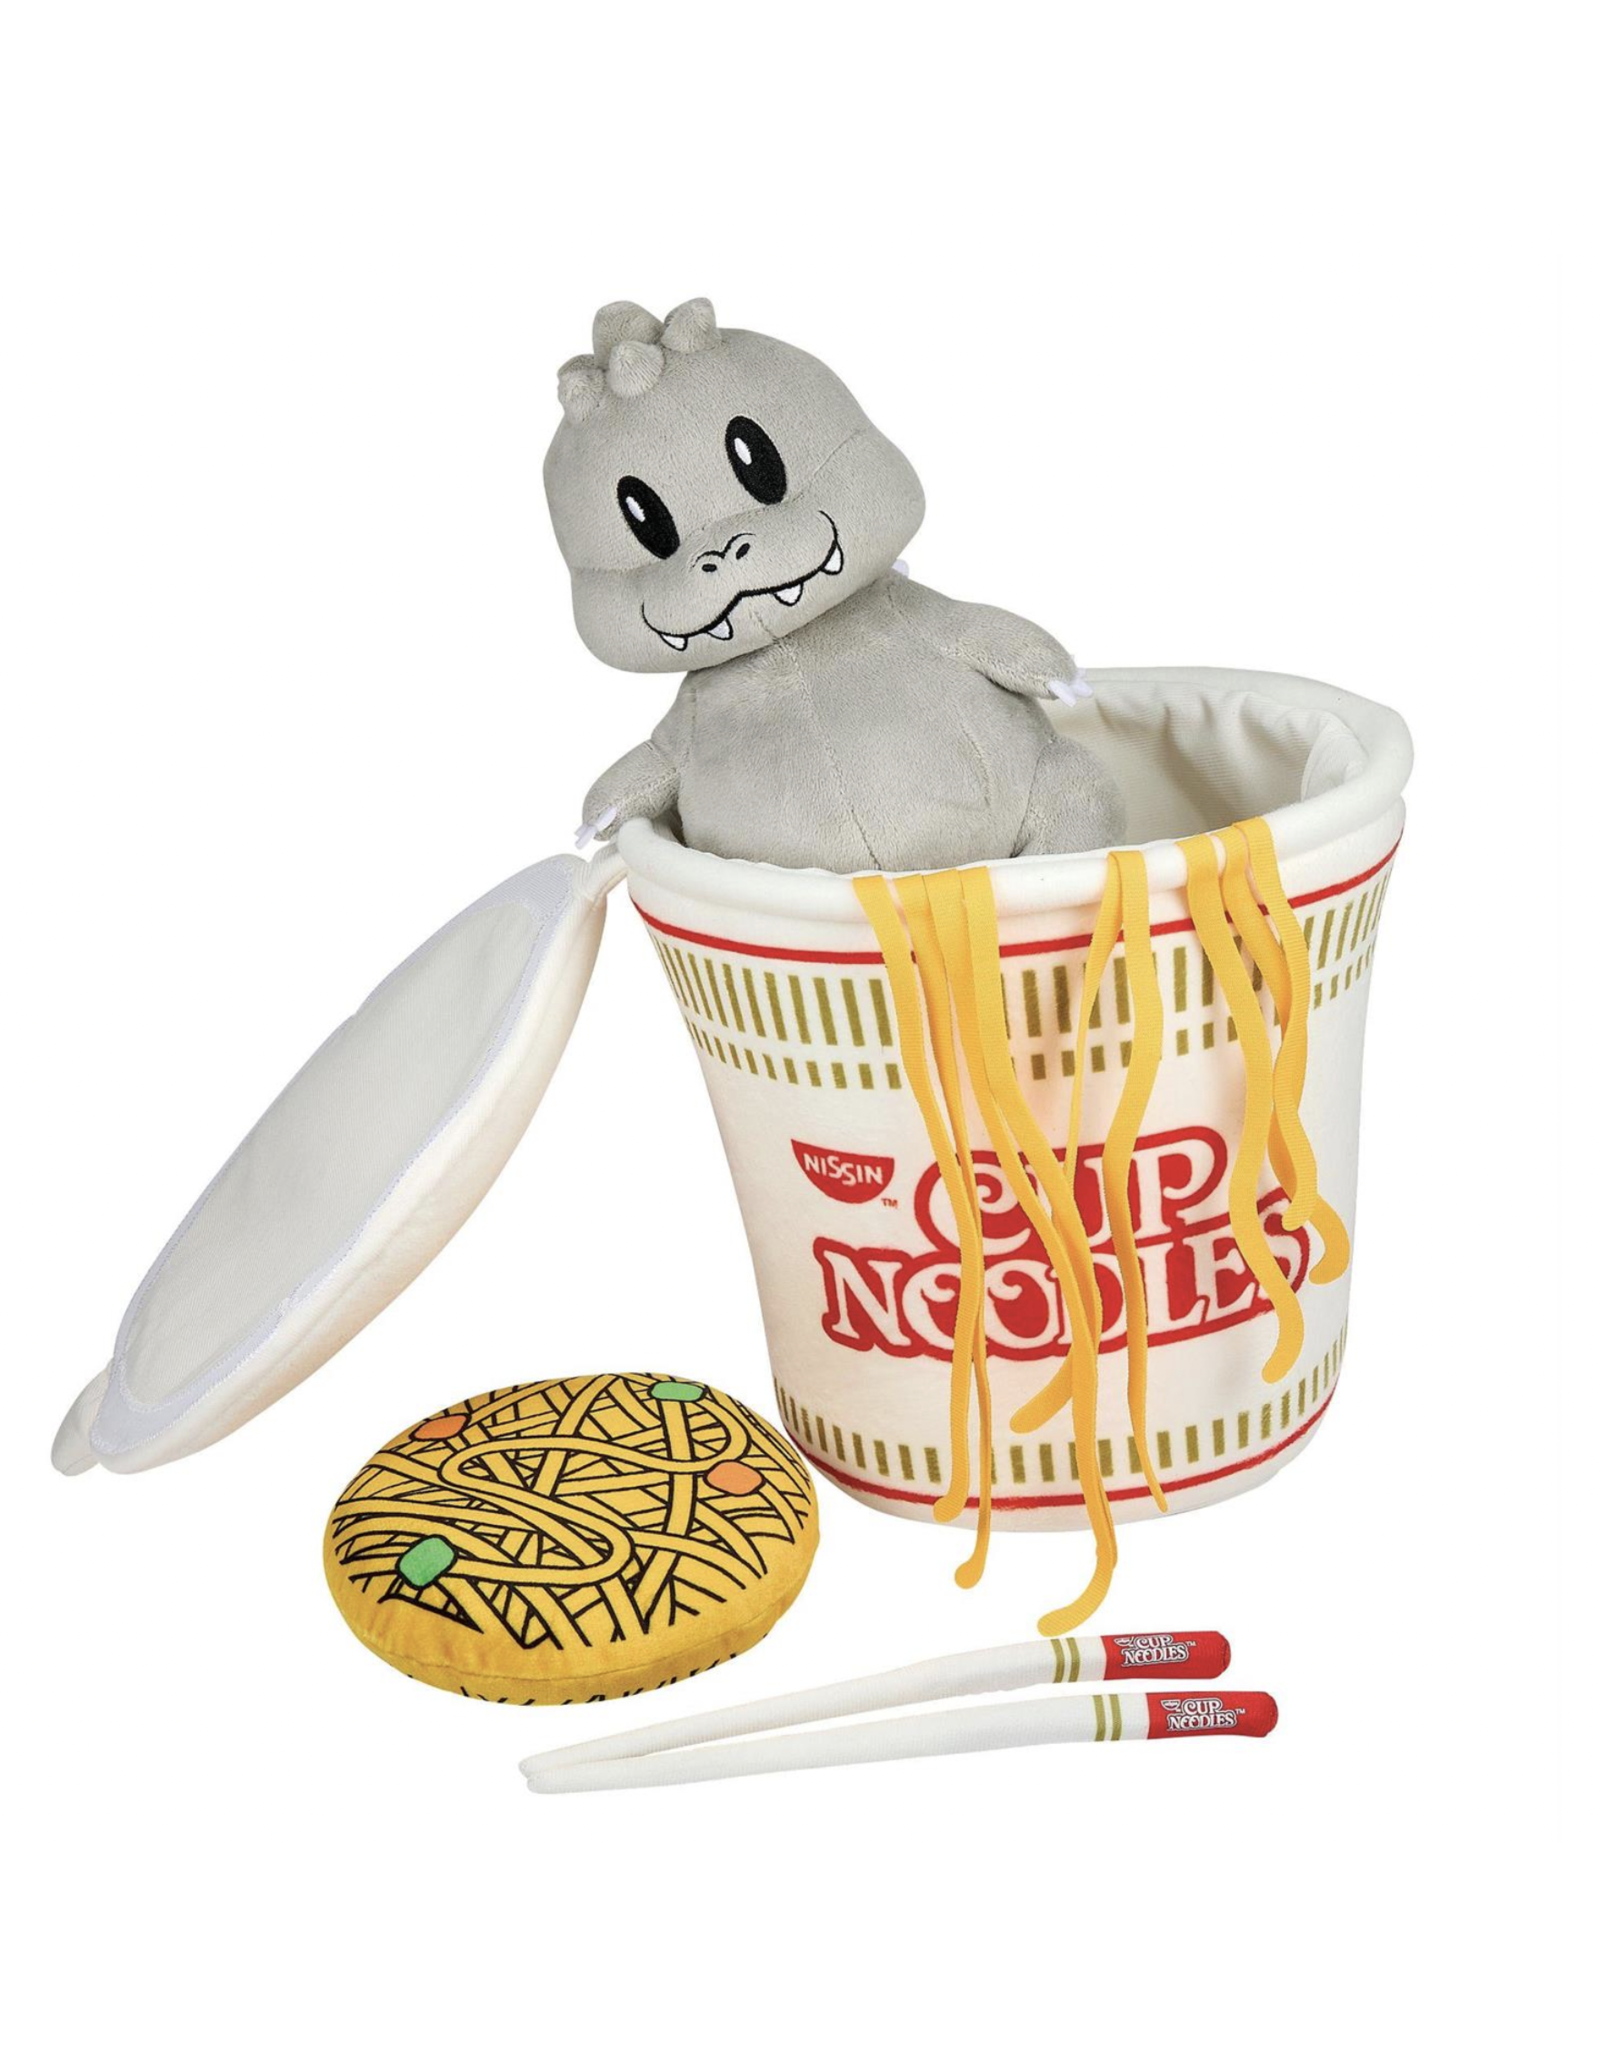 Nissin Godzilla in Cup Noodle Plush